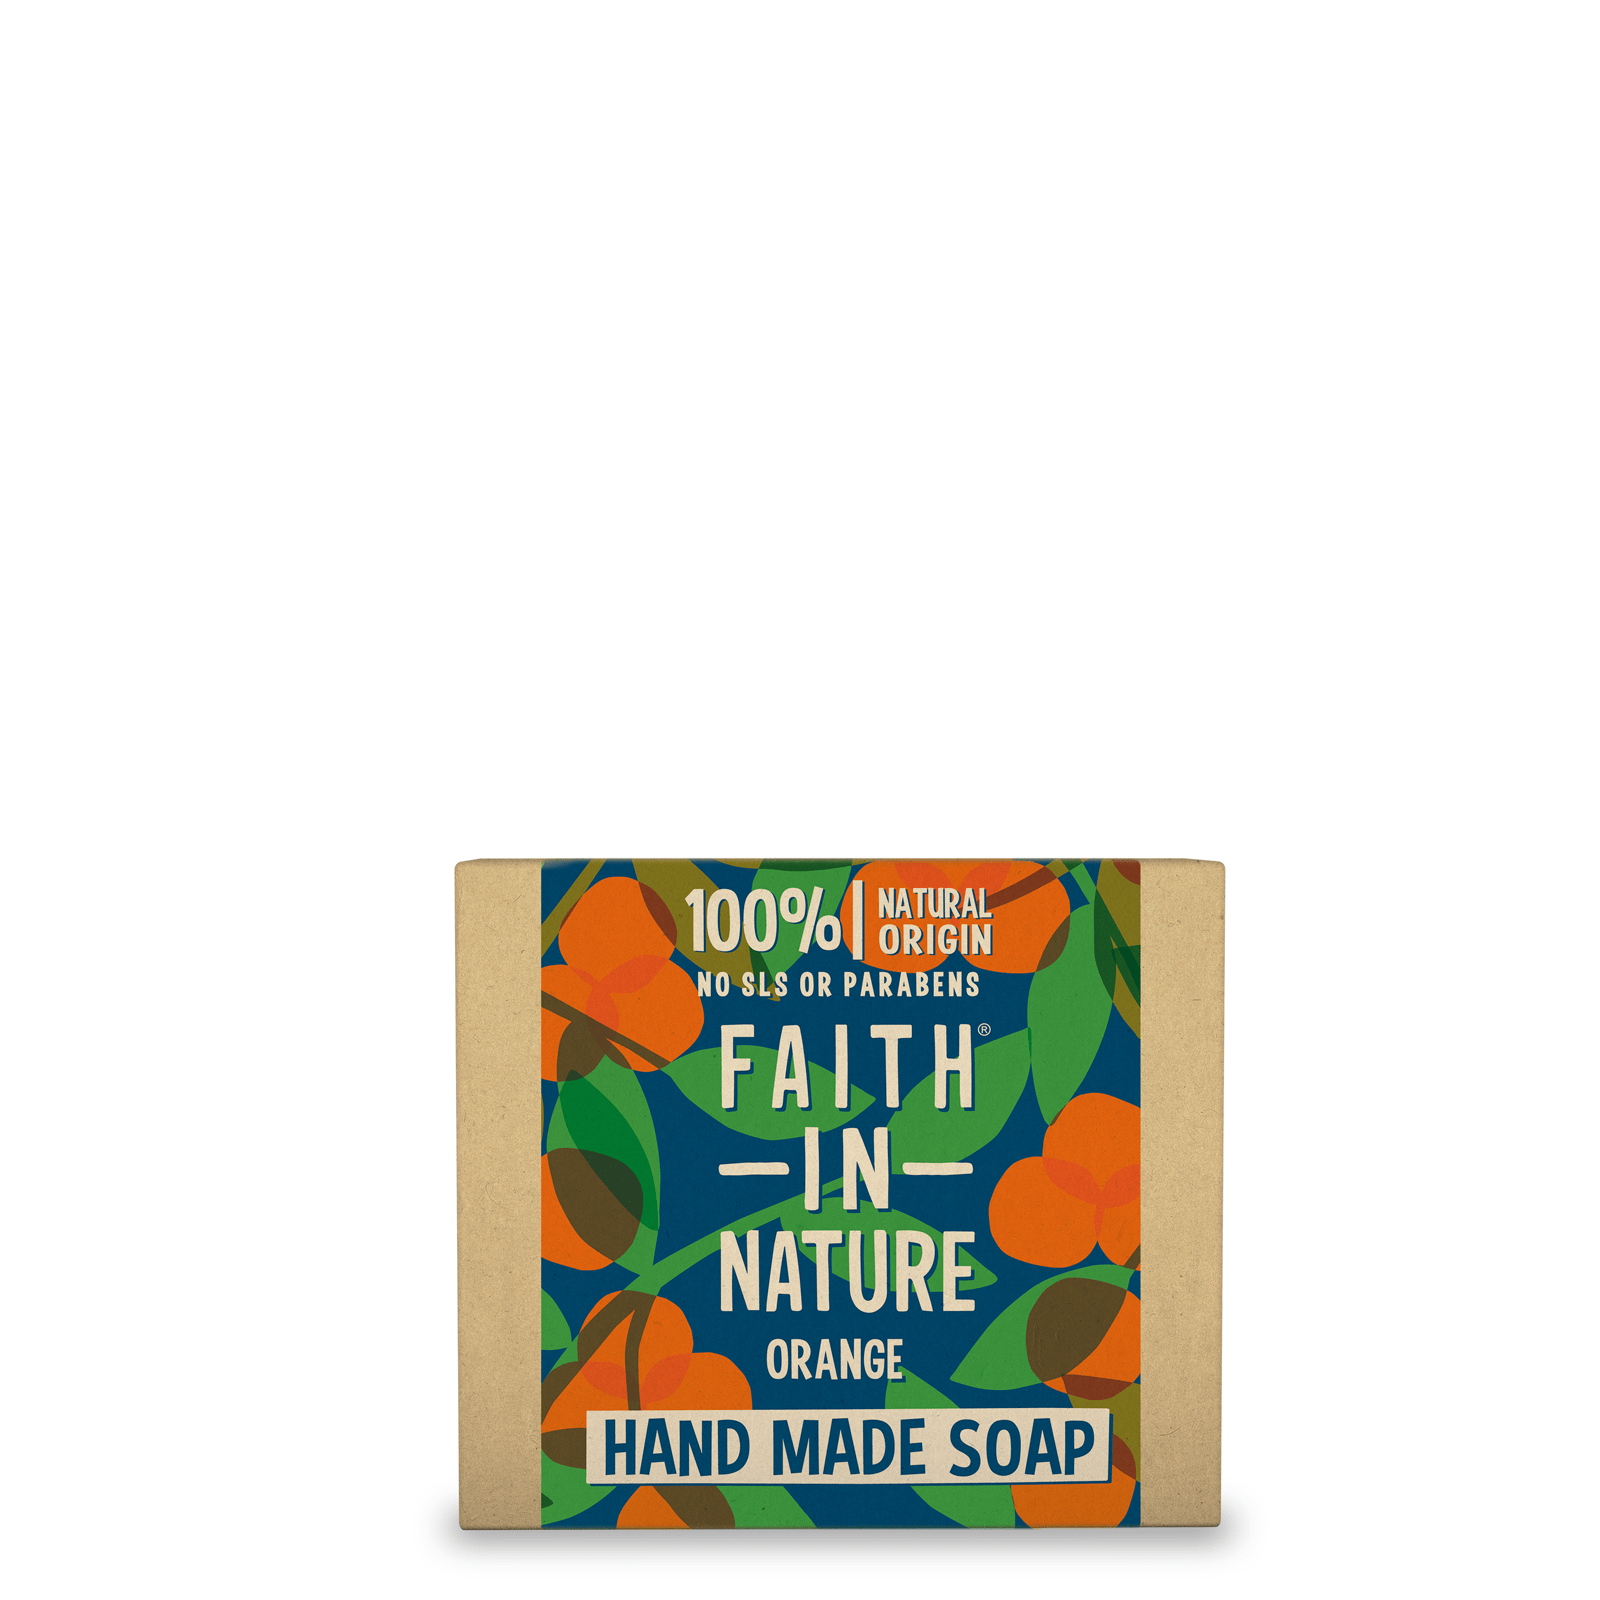 Faith In Nature Orange Soap Bar 100g